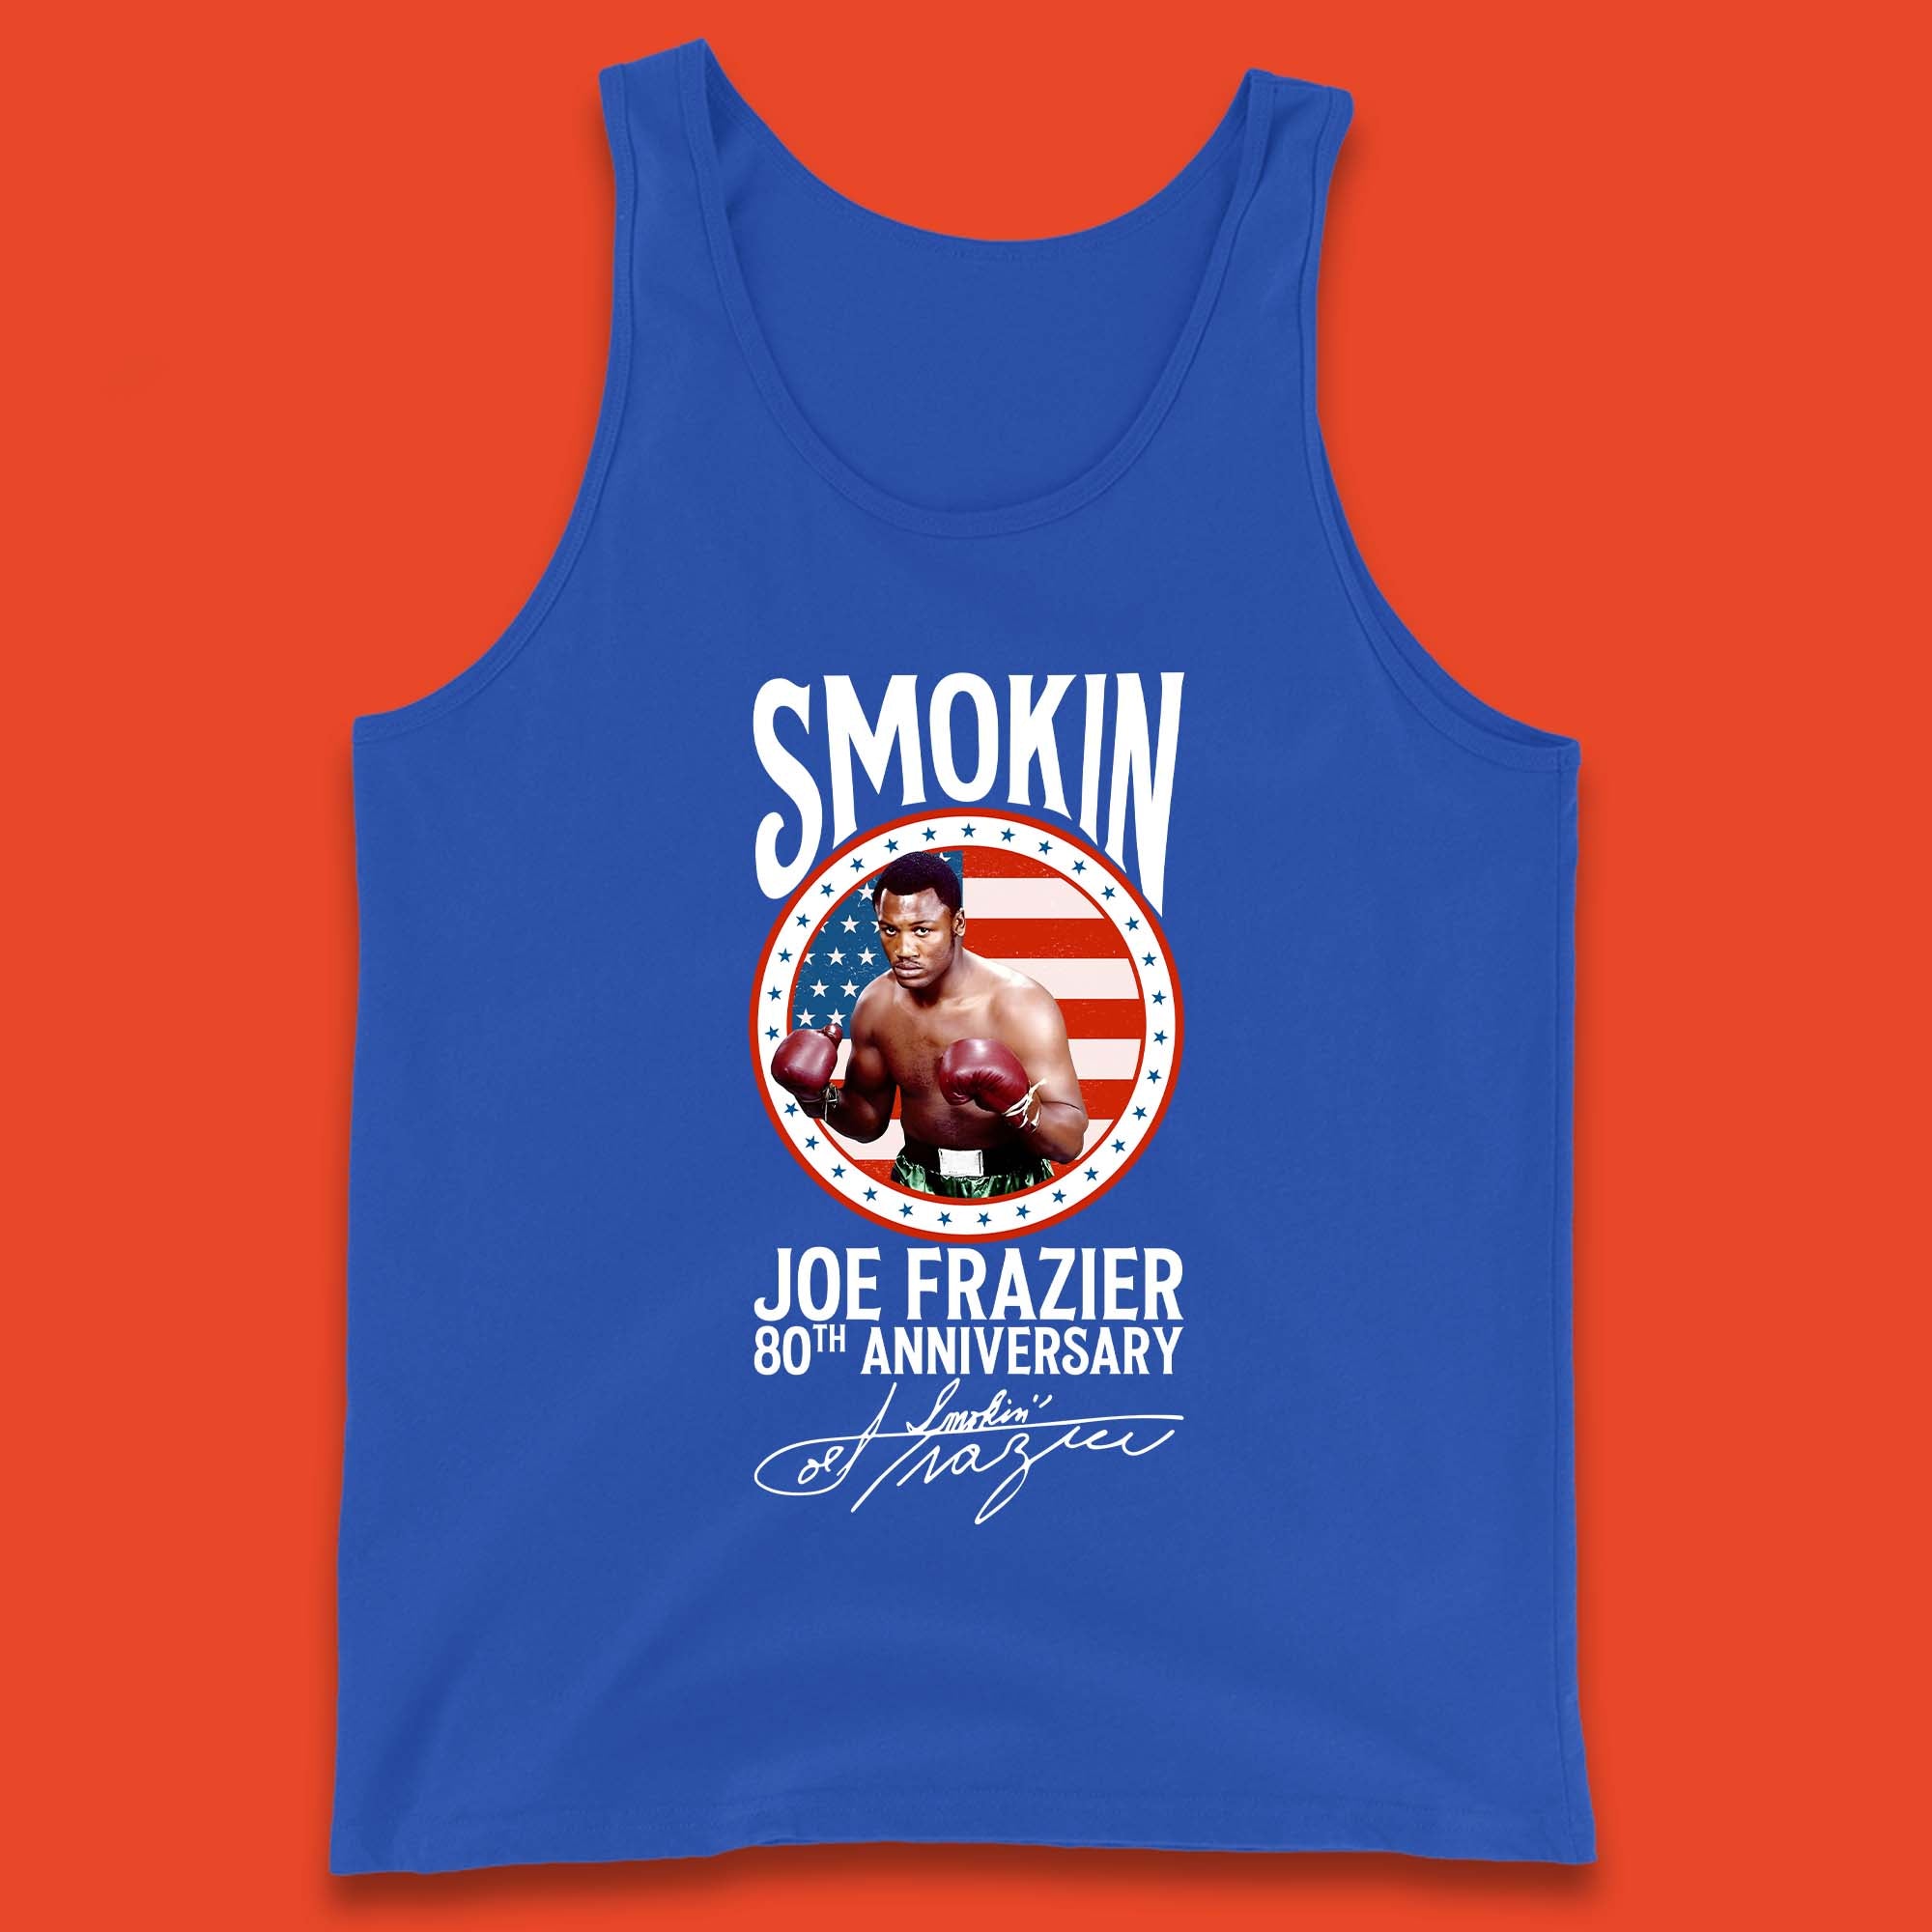 Smokin Joe Frazier 80th Anniversary Tank Top